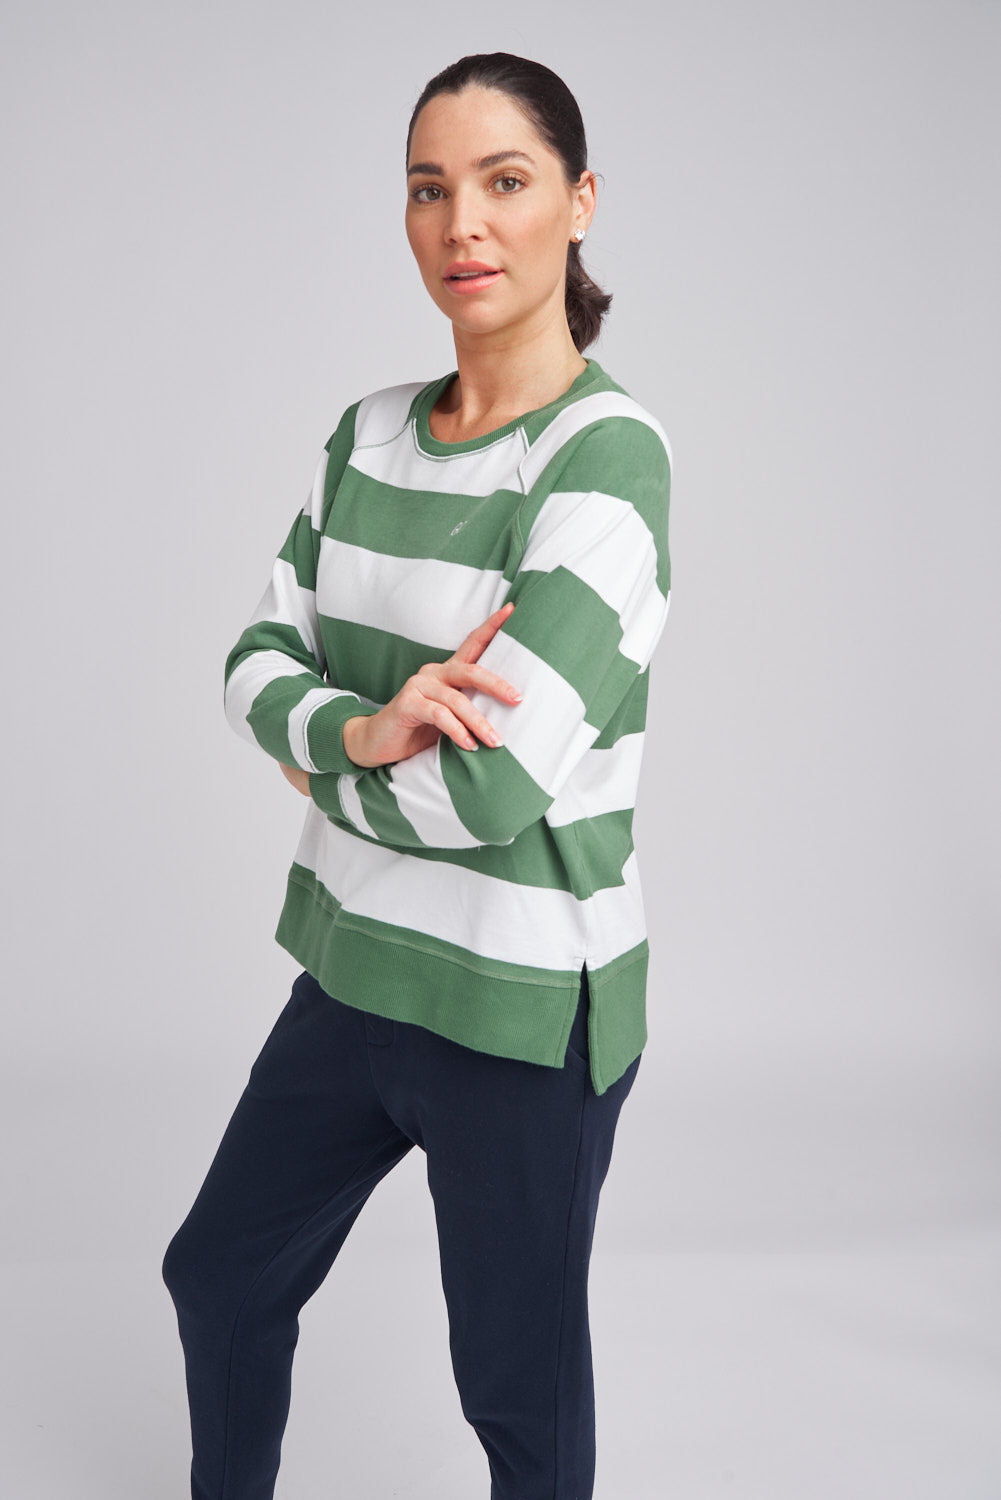 Stripe Sweater | Green / White